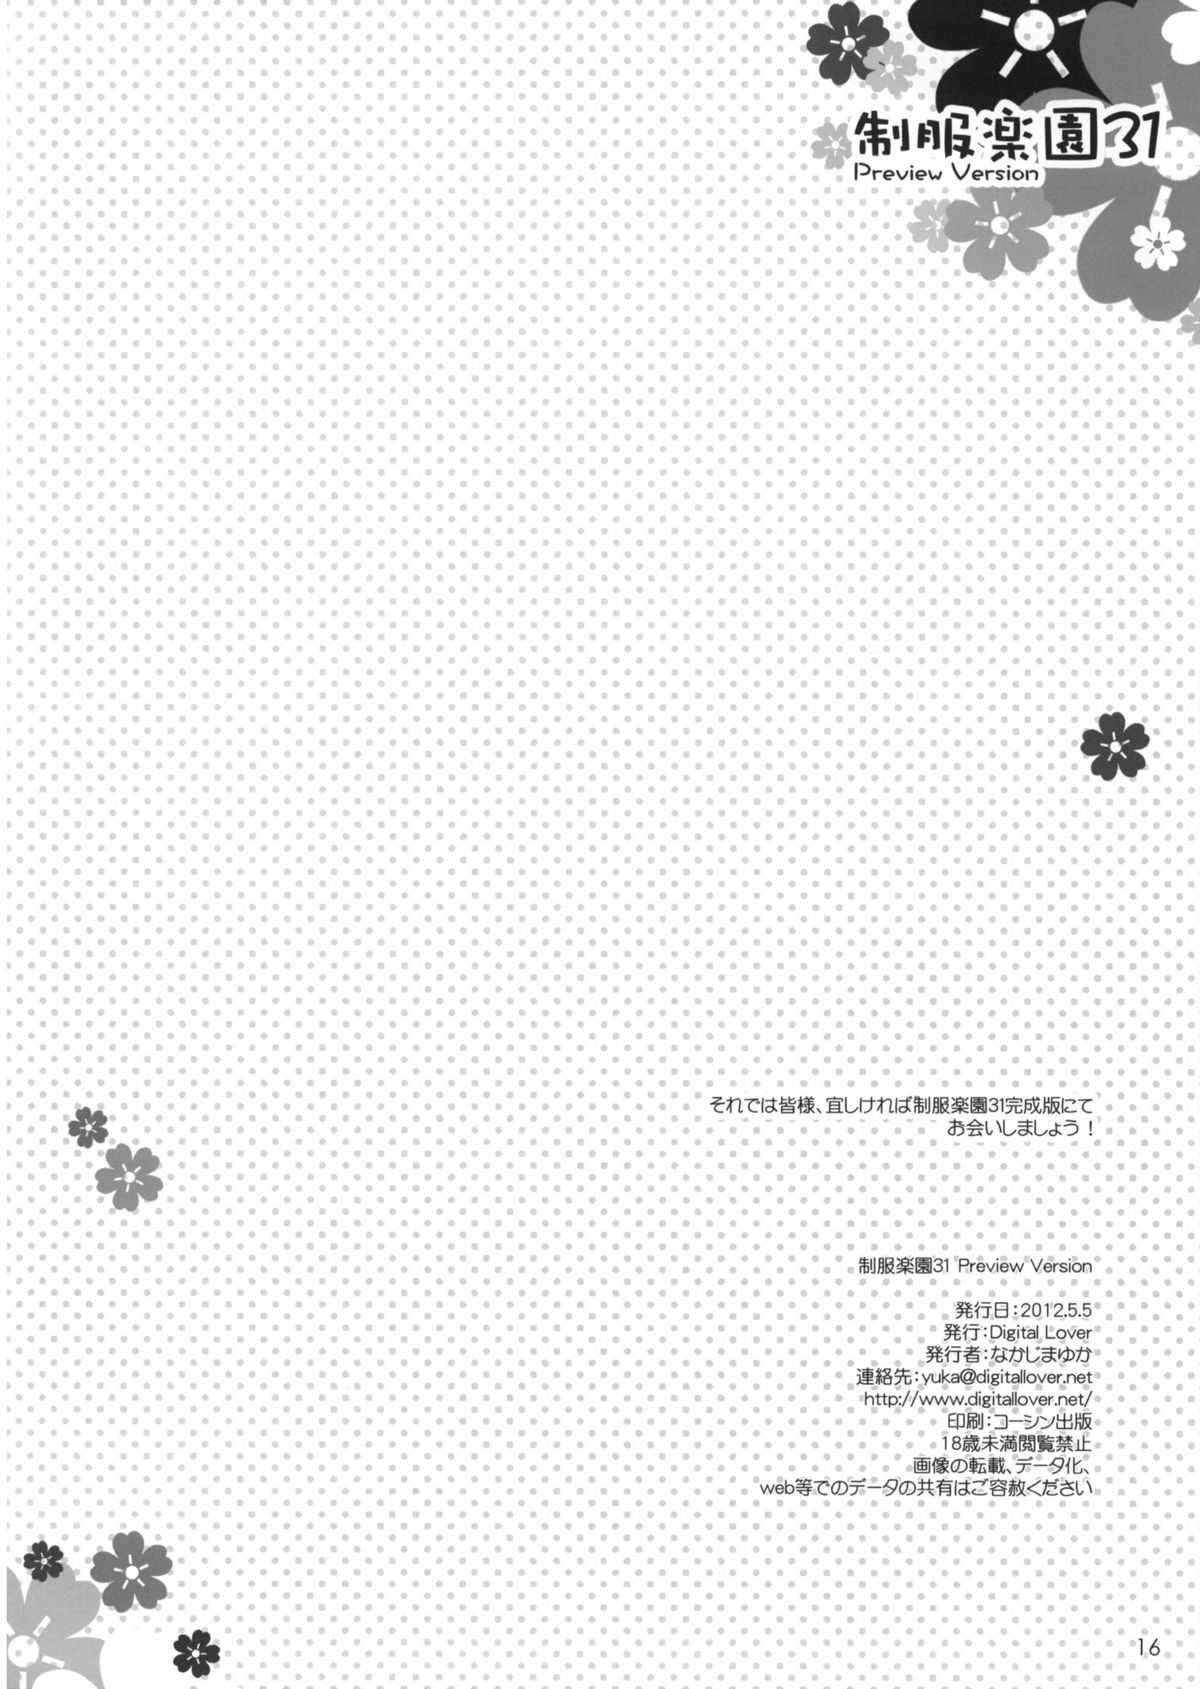 (COMITIA100) [Digital Lover (Nakajima Yuka)] Seifuku Rakuen 31 Preview Version (Original) (コミティア100) [Digital Lover (なかじまゆか)] 制服楽園 31 Preview Version (オリジナル)